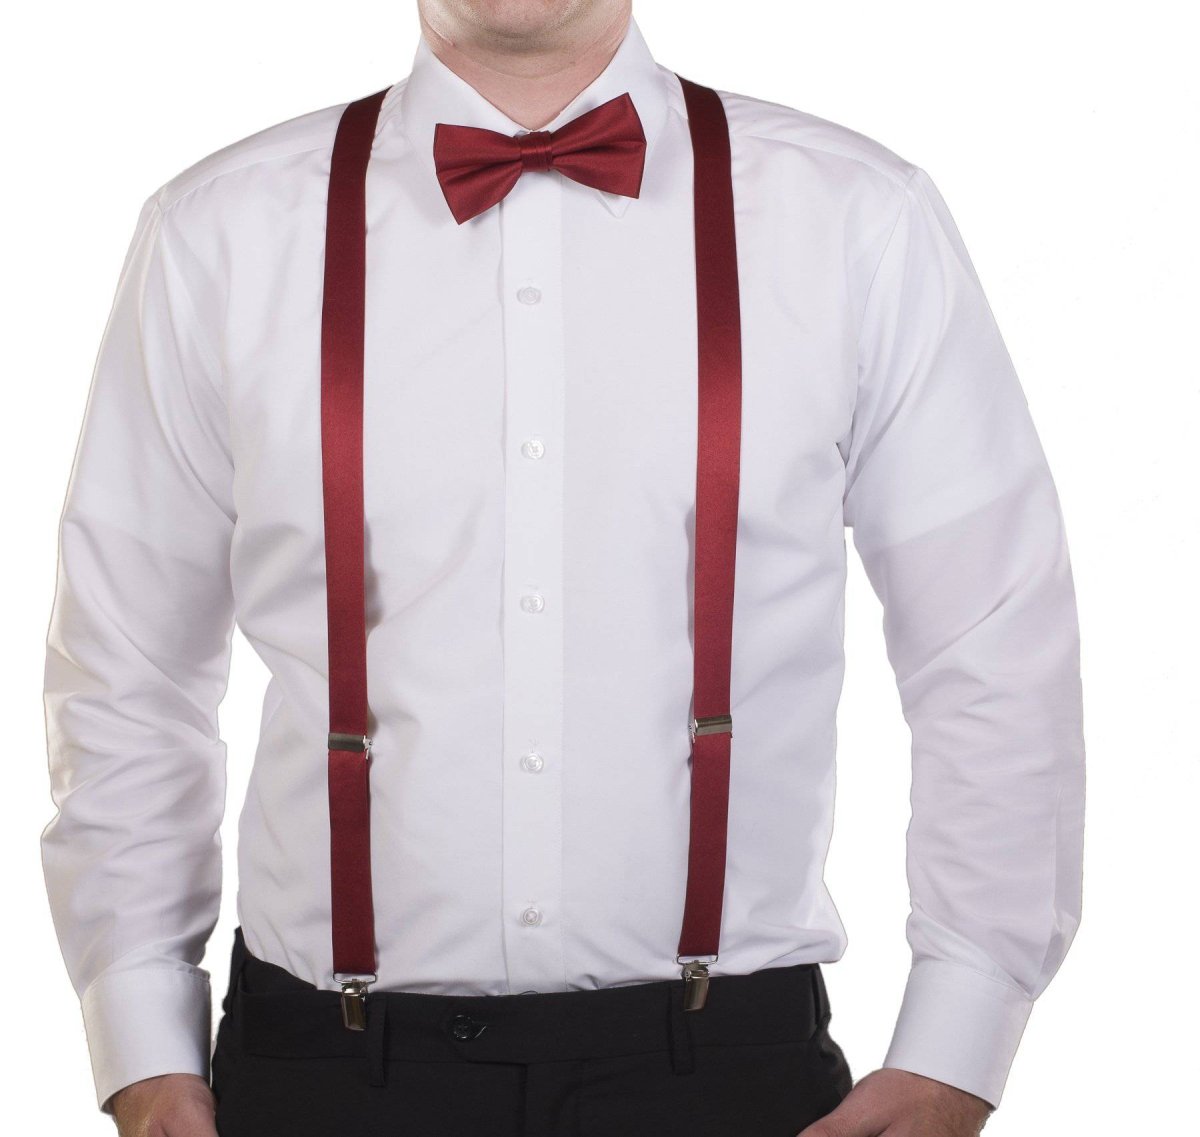 Satin Suspender and Bow Tie Set Combo in Men’s & Kids Sizes - Tuxgear